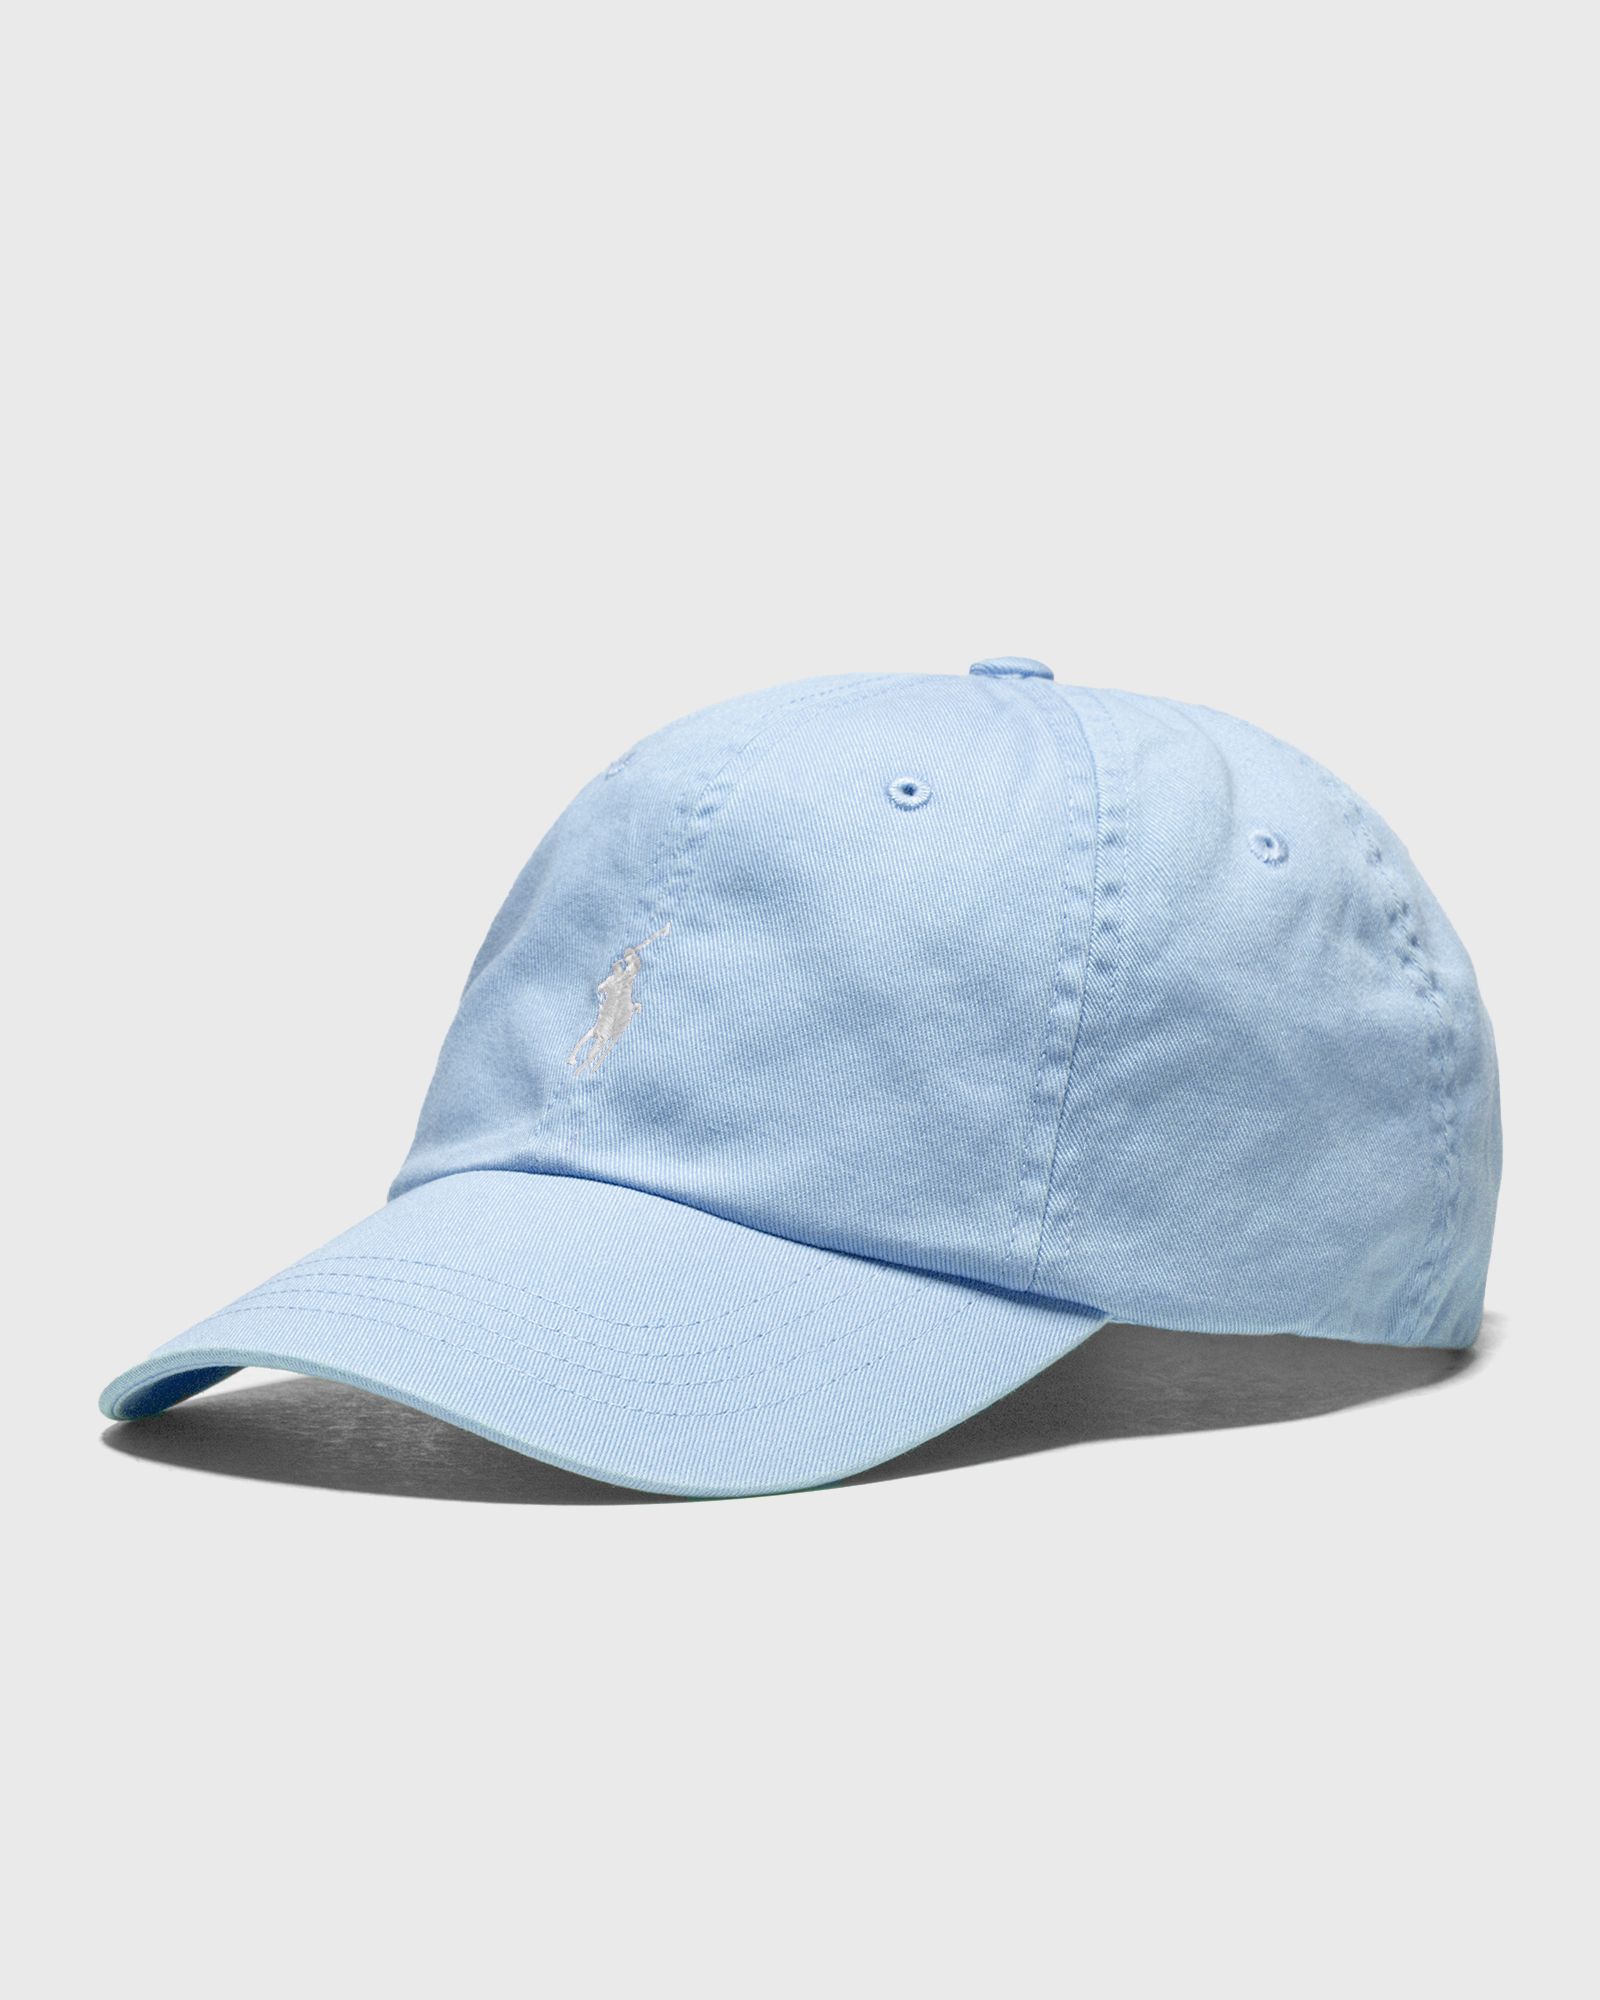 Polo Ralph Lauren - classic sport cap men caps blue in größe:one size